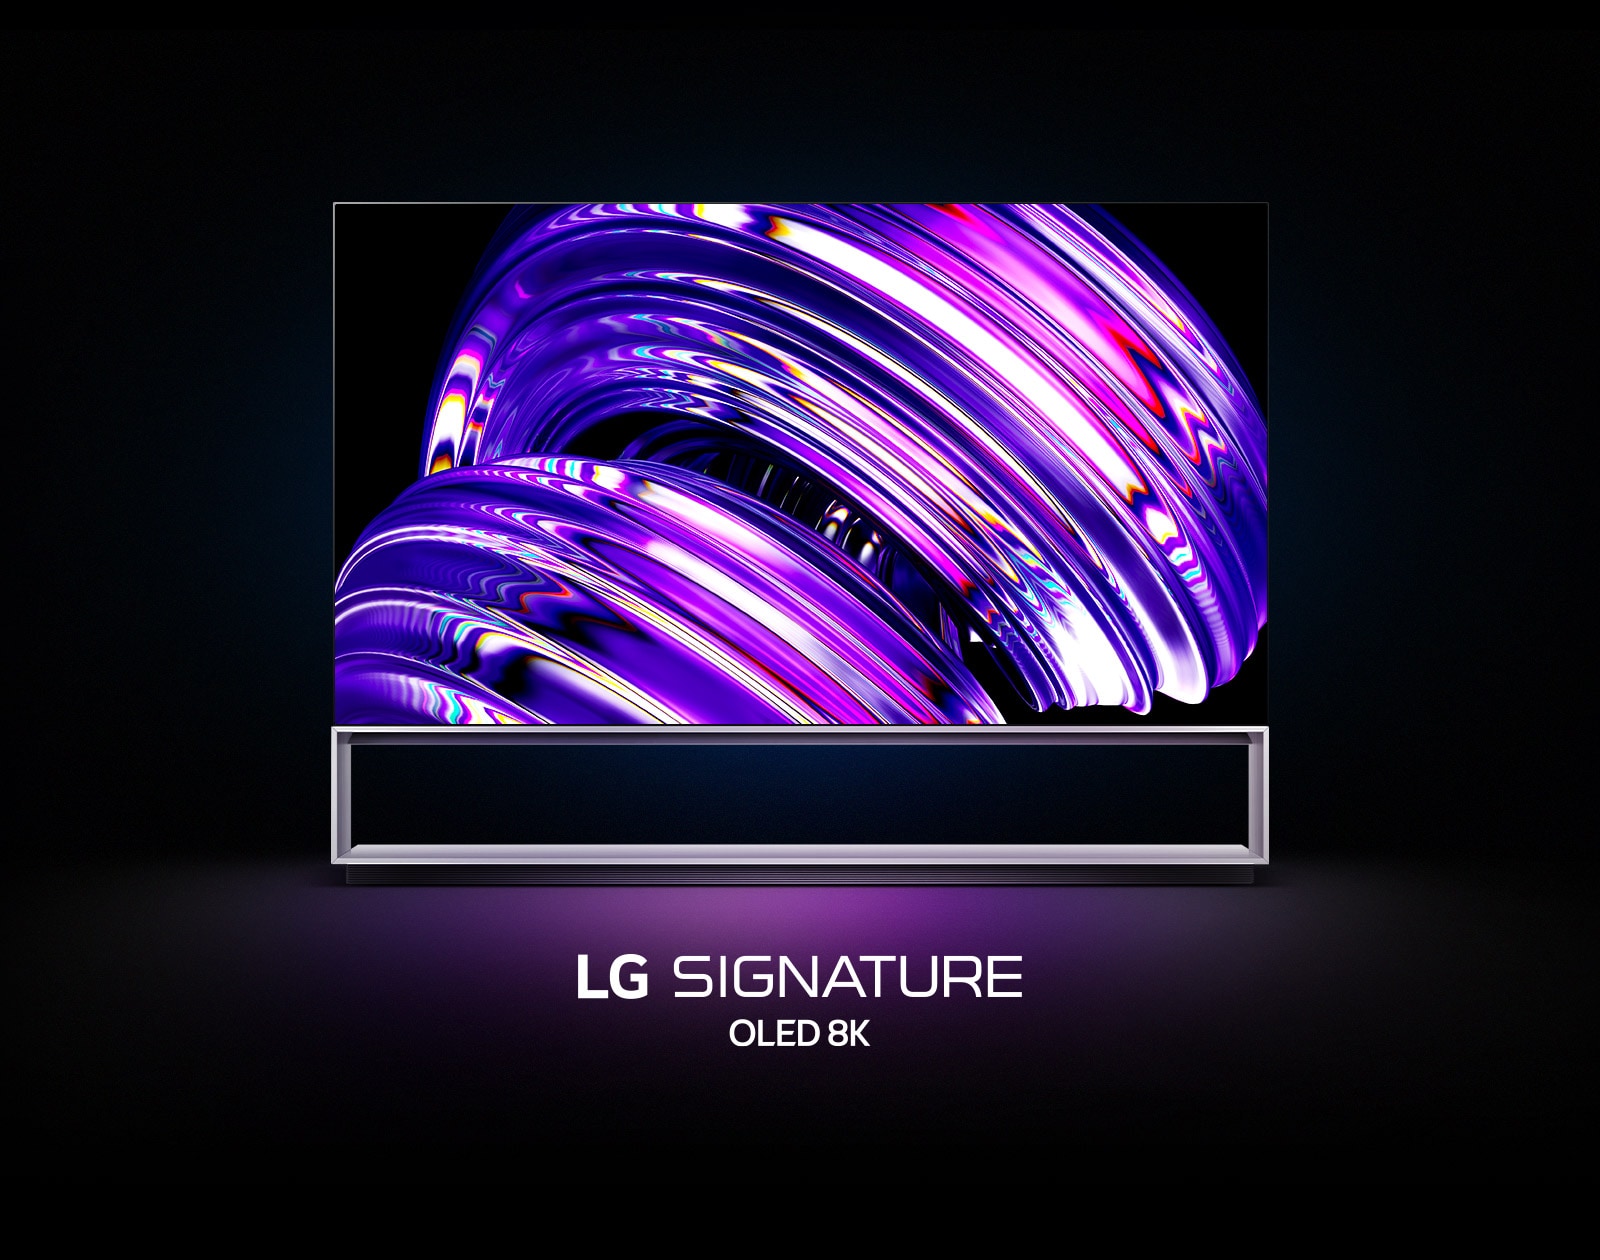 Oblik LG OLED Z2 pojavljuje se na crnoj pozadini. Kada se u potpunosti pojavi, na ekranu se prikazuje apstraktna ljubičasta slika, a ispod se pojavljuju reči „LG SIGNATURE OLED 8K”.